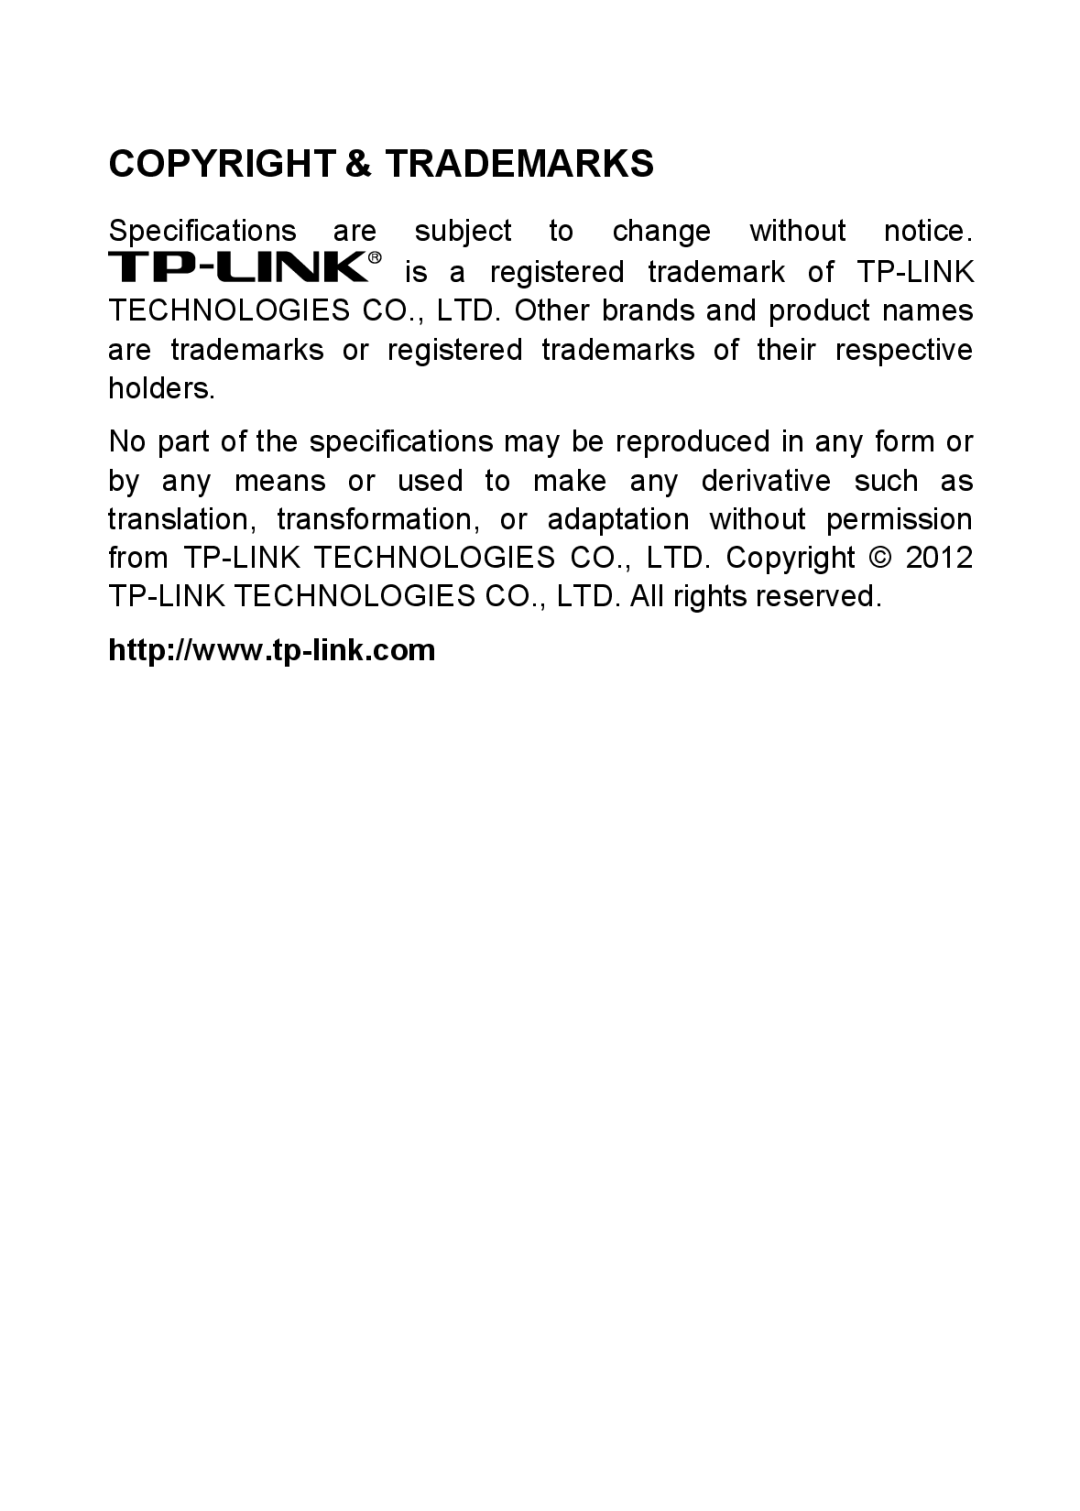 TP-Link TL-POE10R manual Copyright & Trademarks 